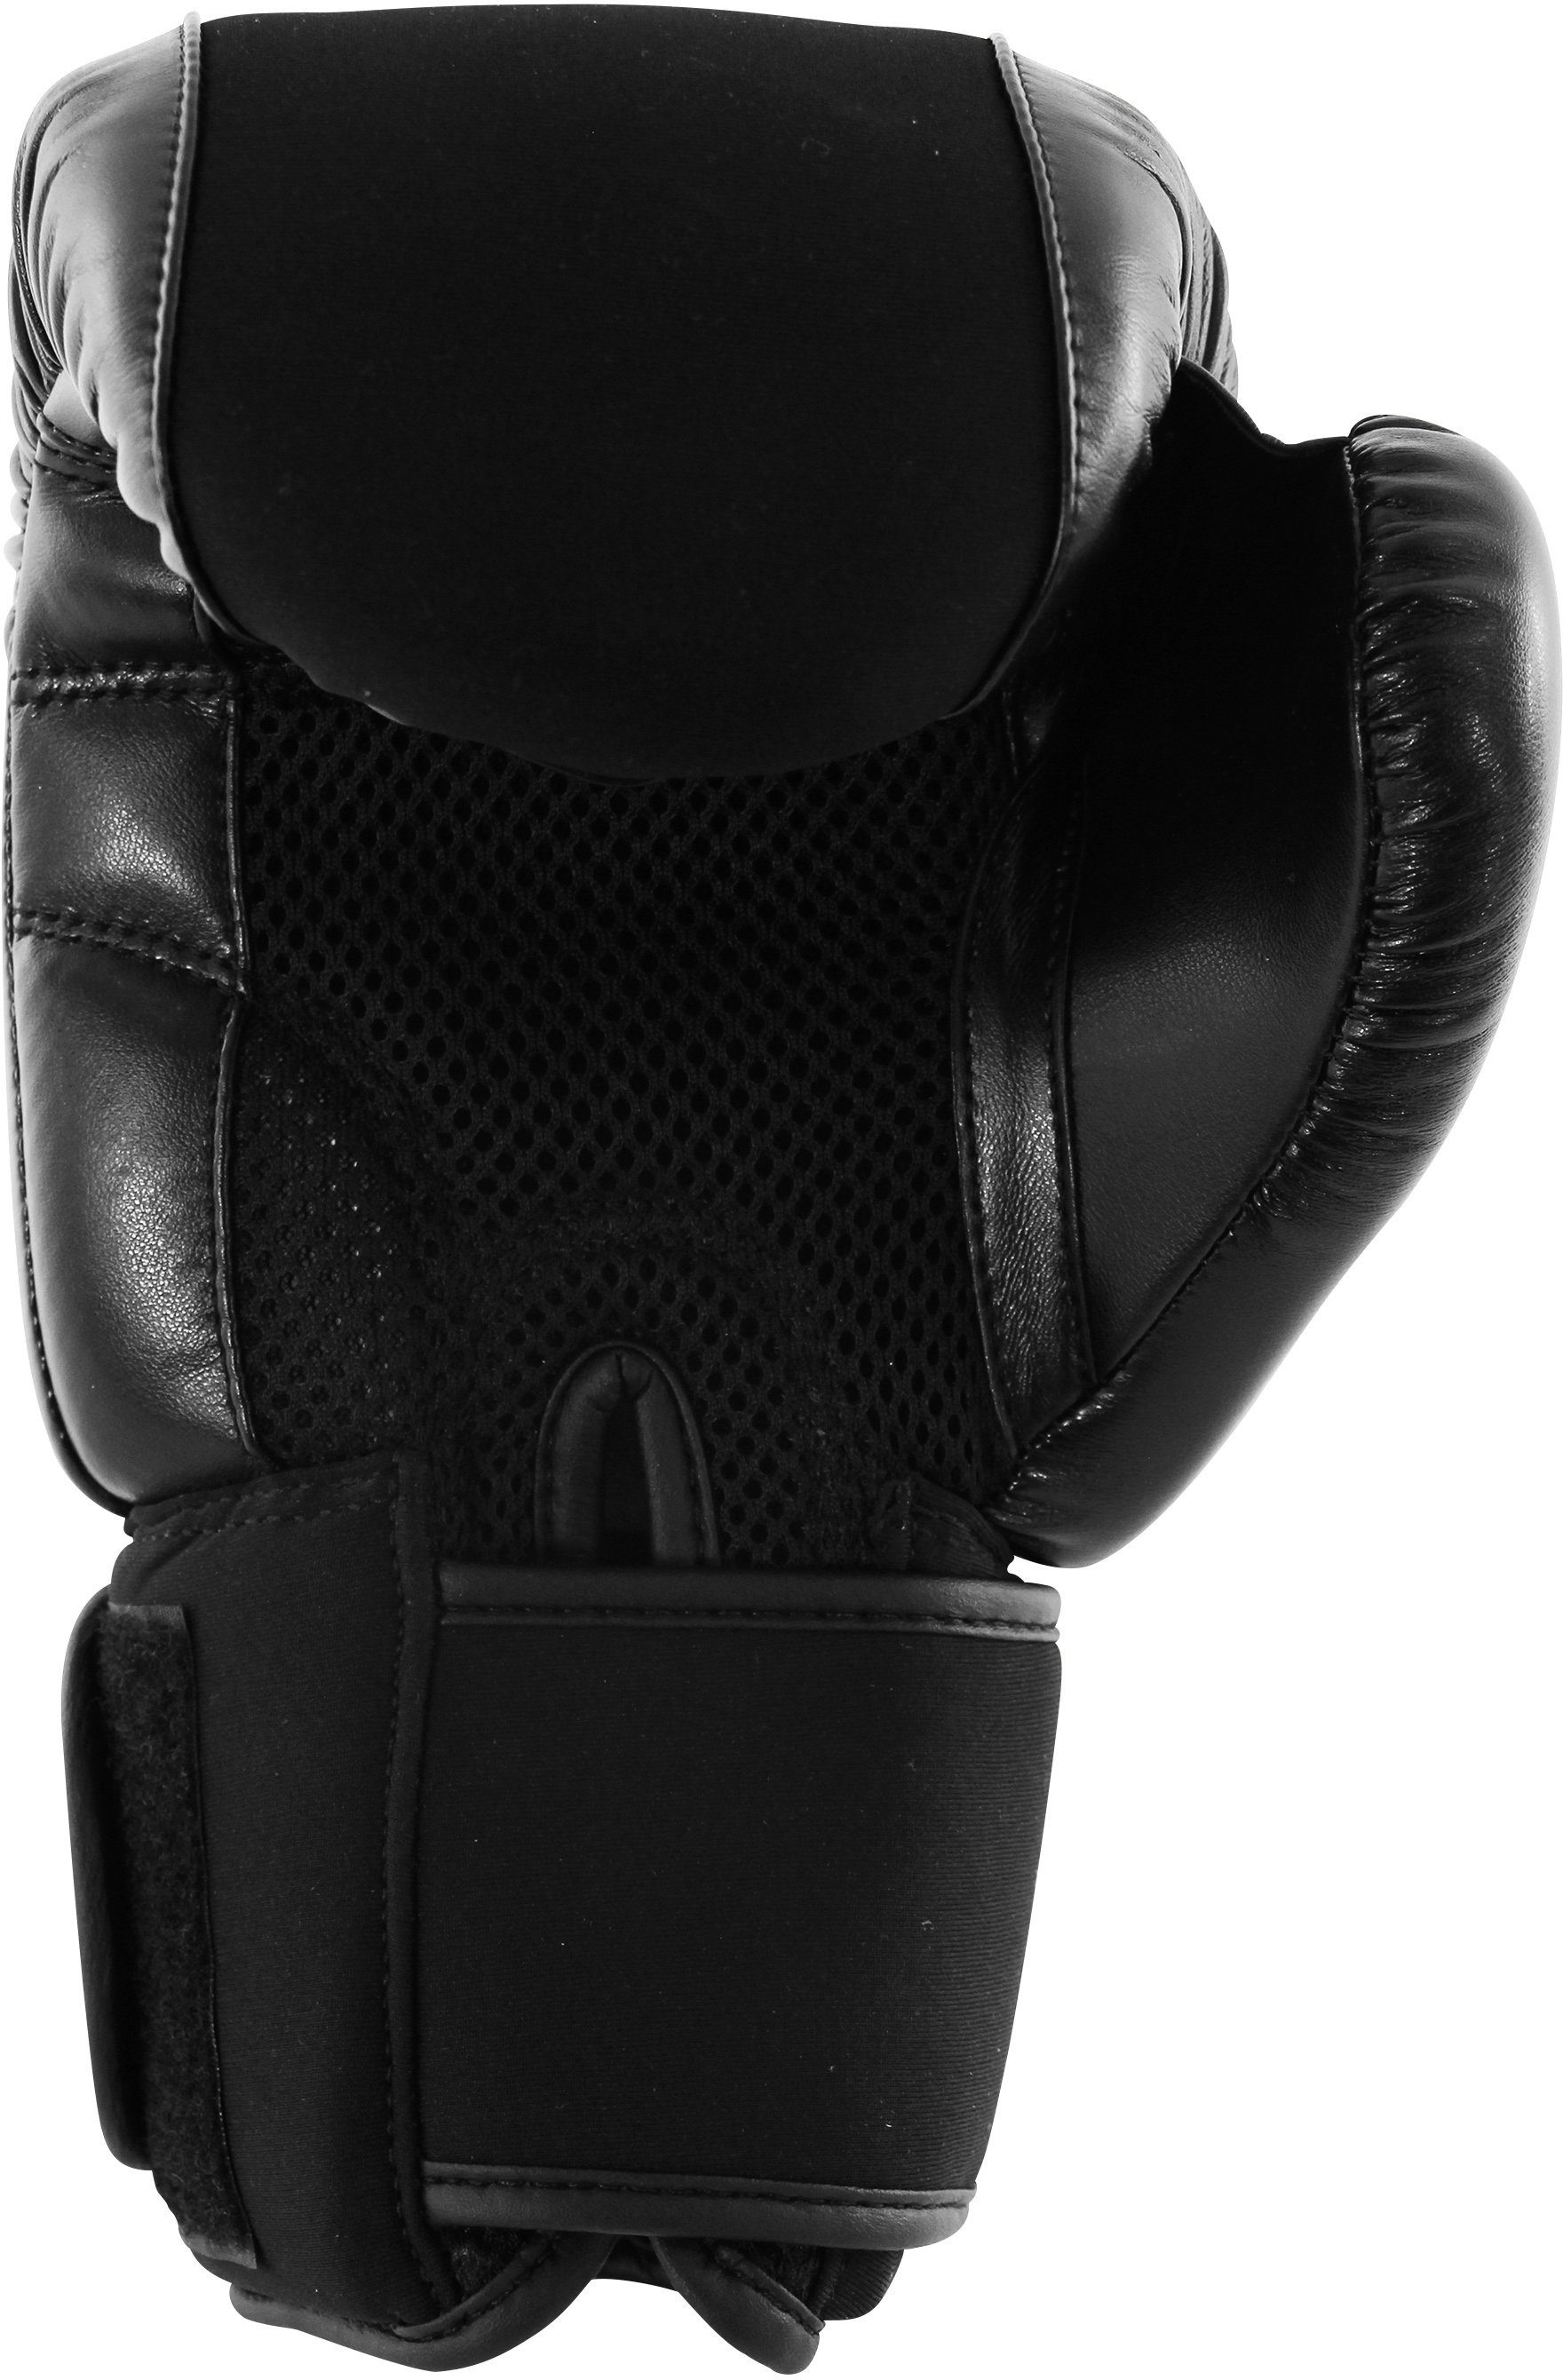 Performance S–M Gloves adidas Boxing Washable Boxhandschuhe